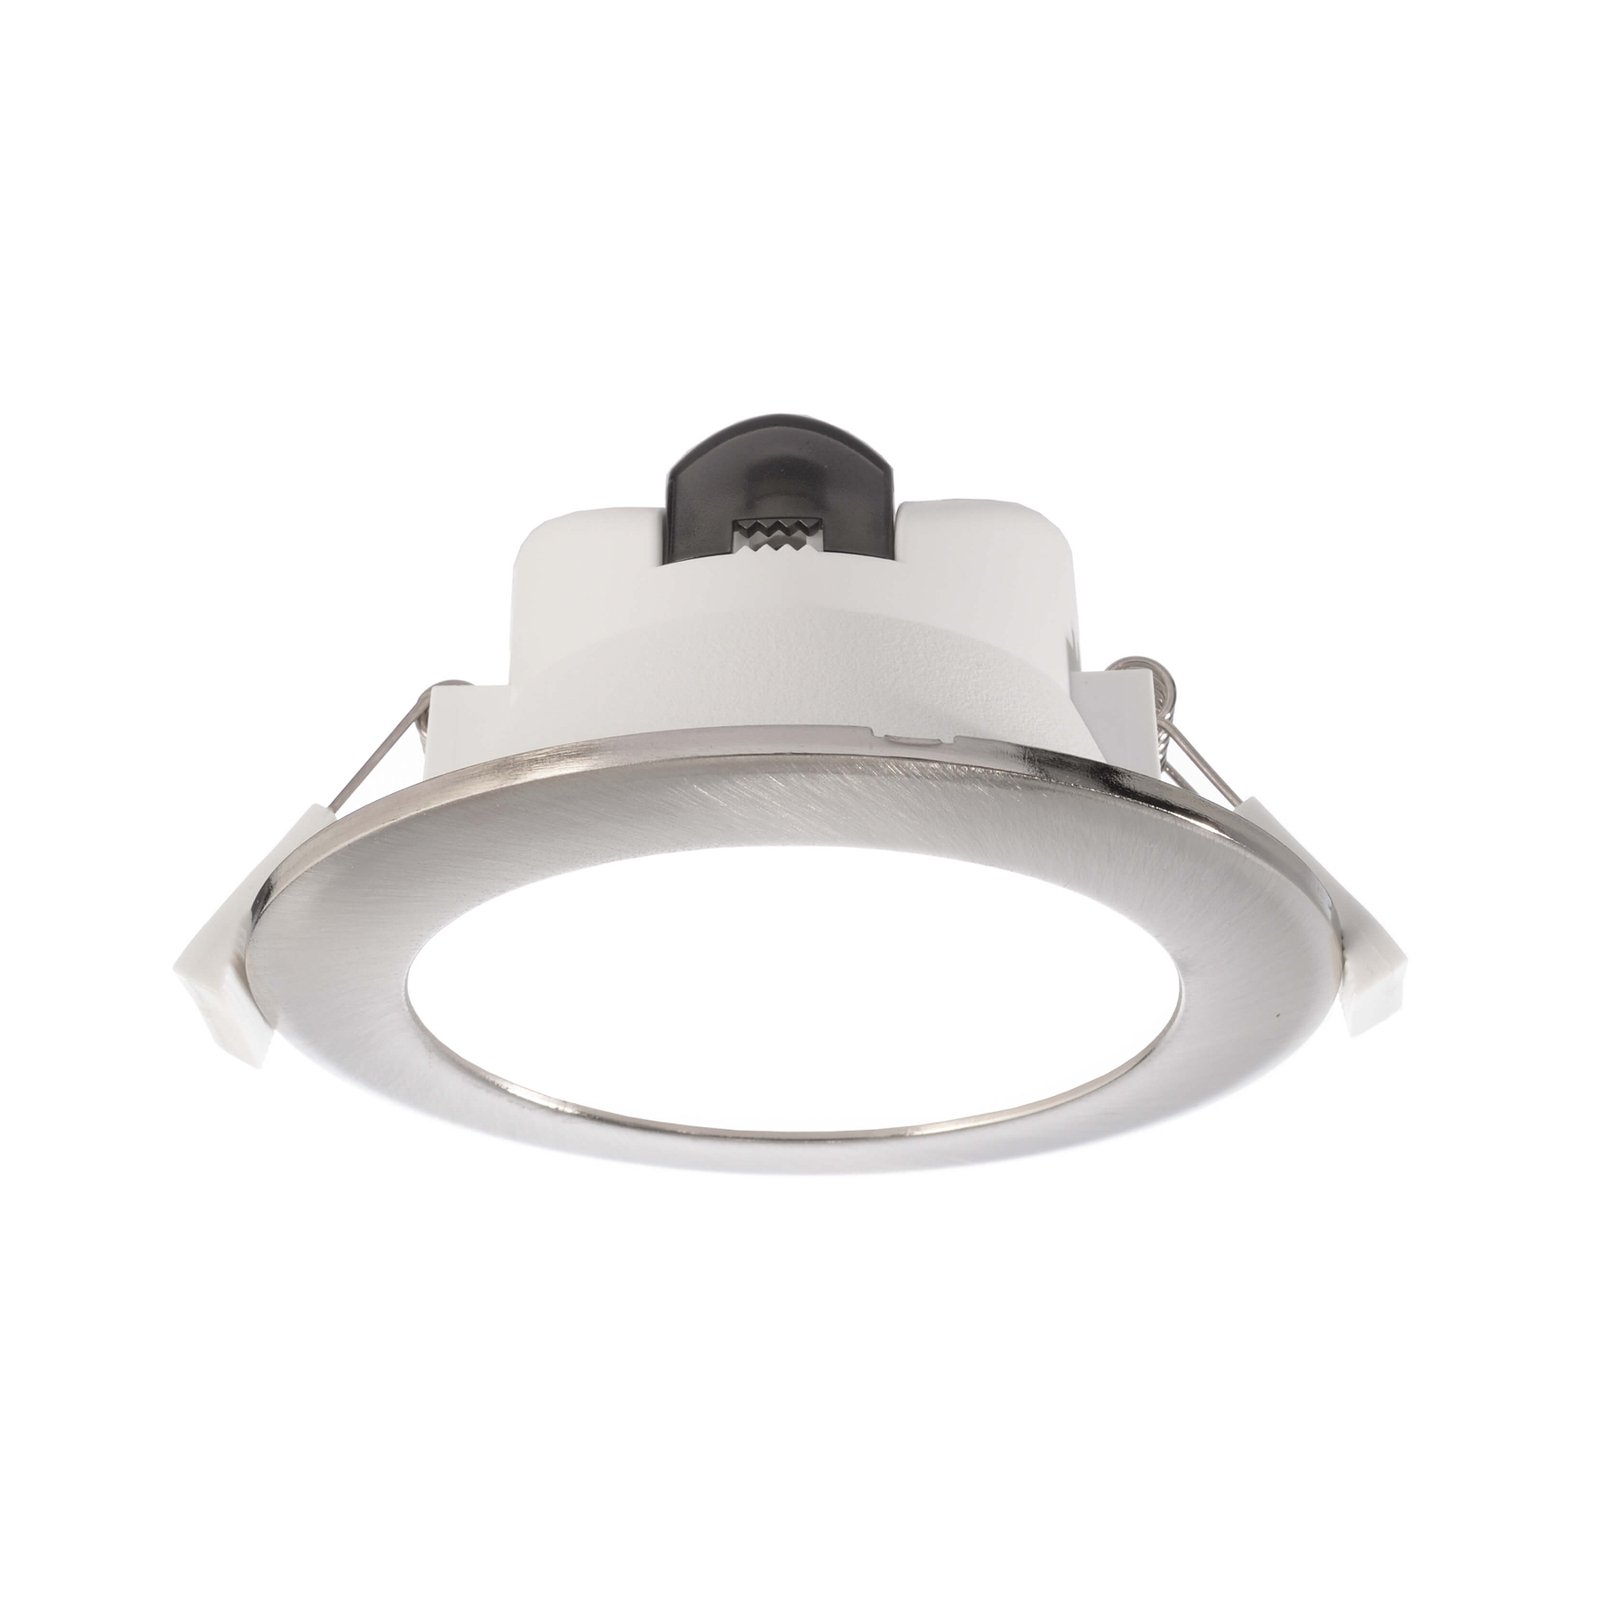 Downlight LED Acrux 90, bianco, Ø 11,3 cm